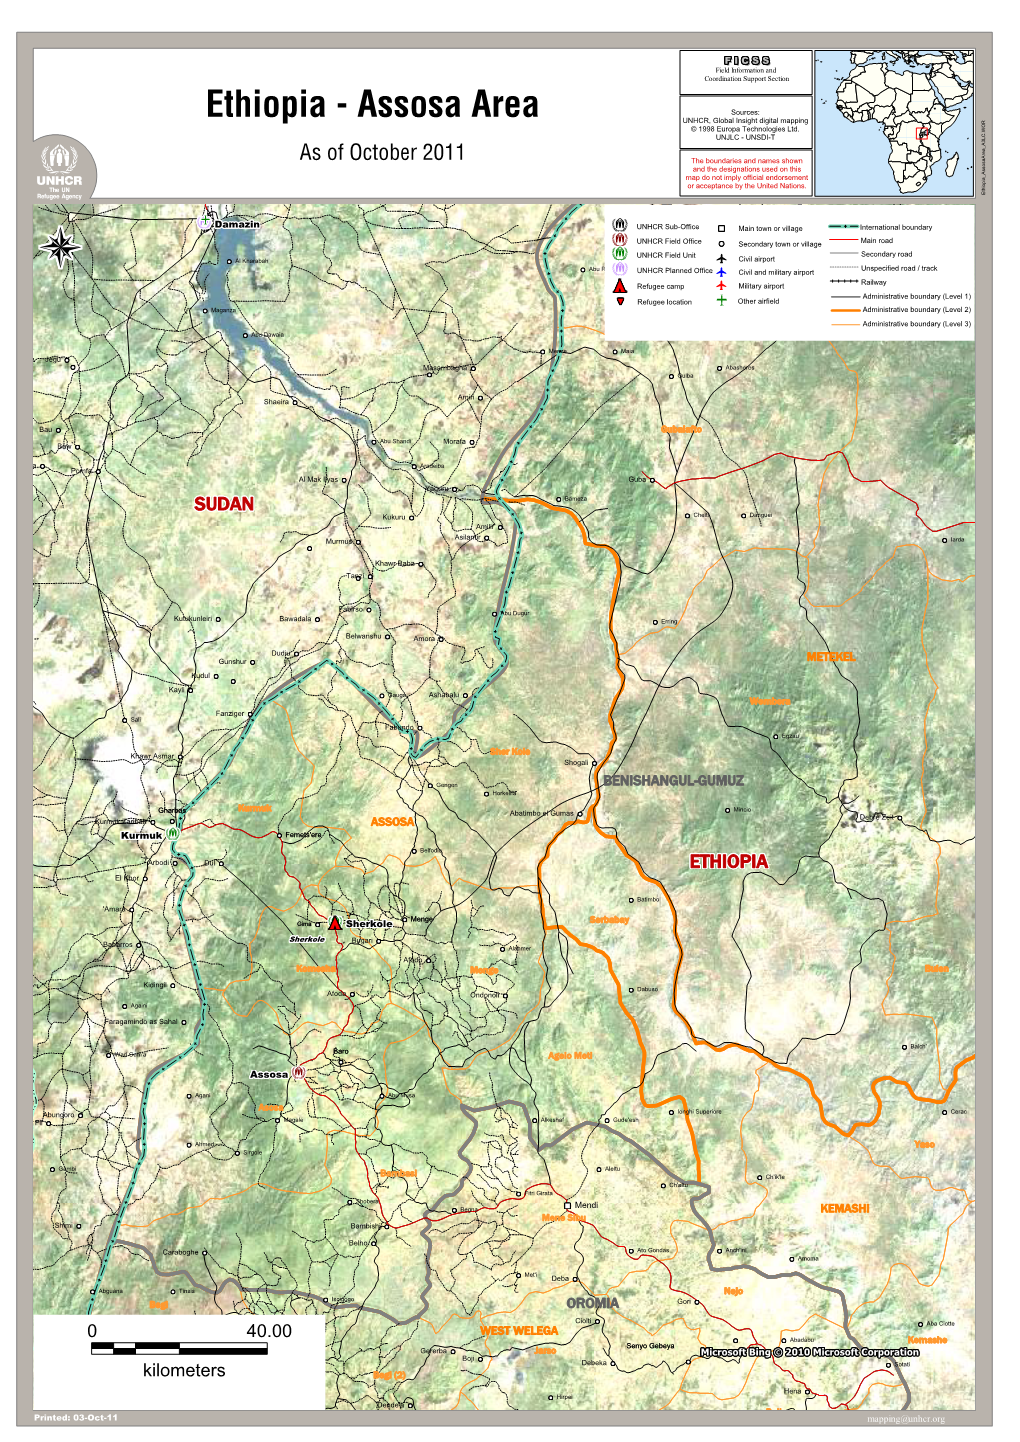 Ethiopia - Assosa Area UNHCR, Global Insight Digital Mapping © 1998 Europa Technologies Ltd